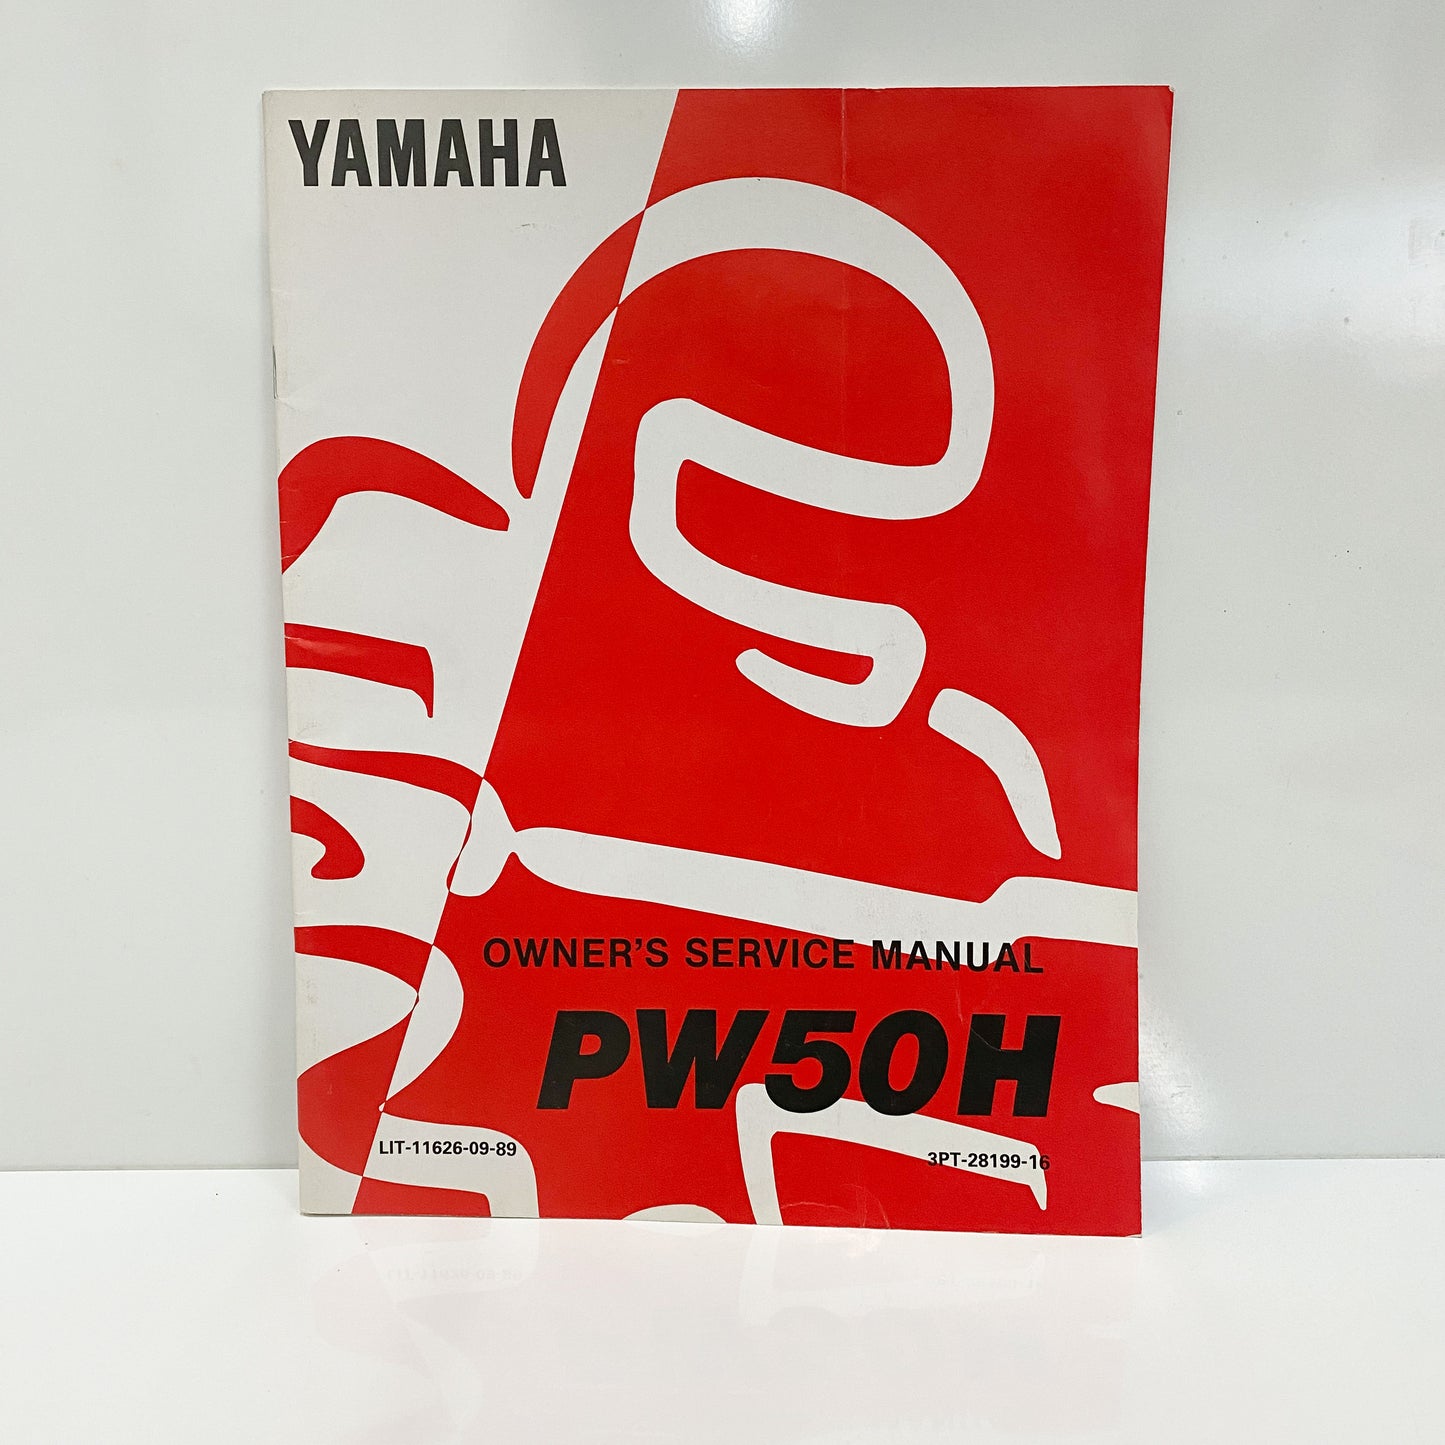 Yamaha PW50H Owners Service Manual LIT-11626-09-89 NOS